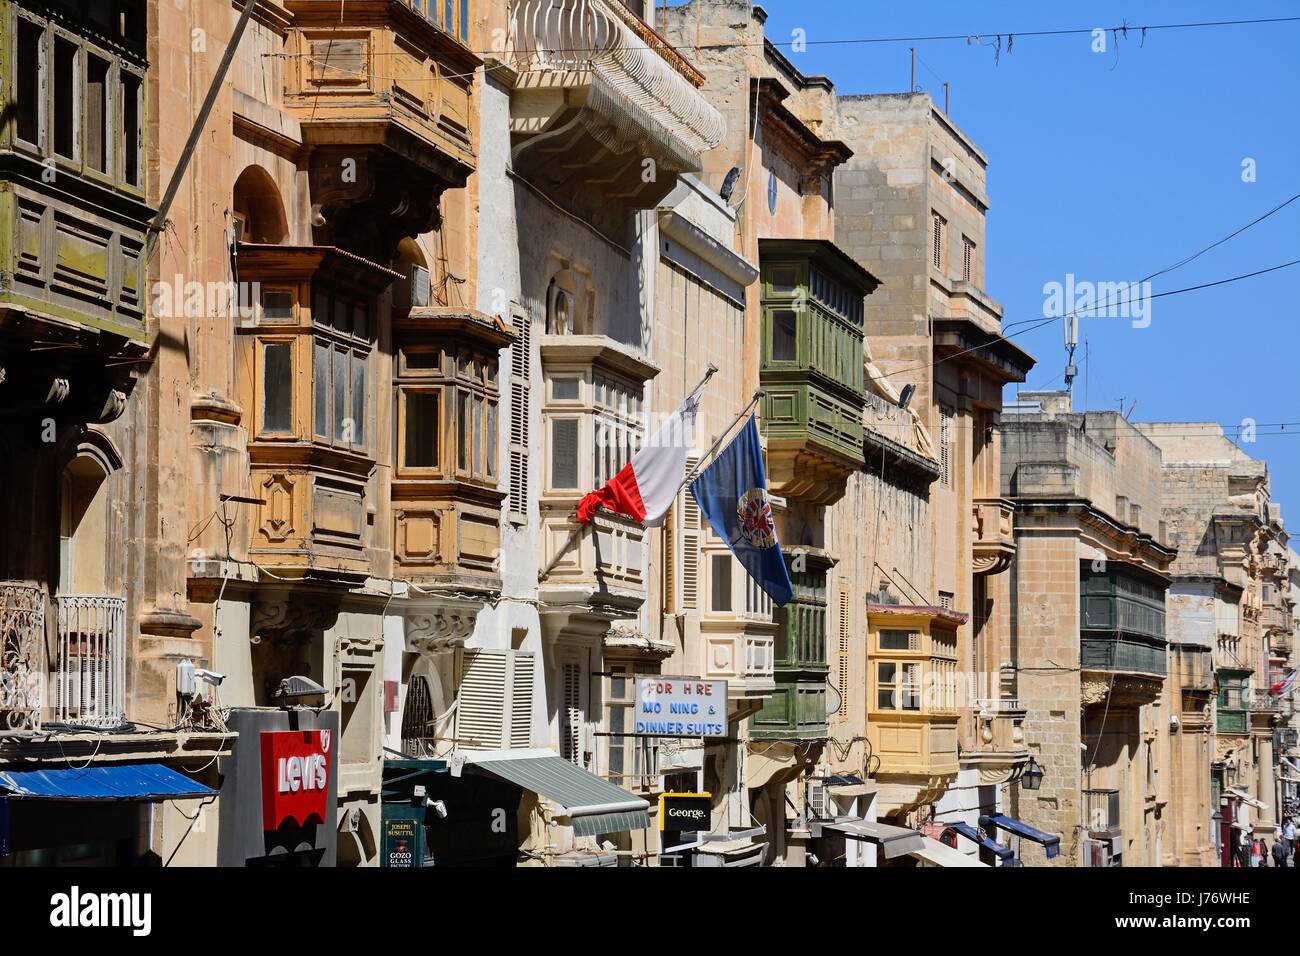 Elaborate buildings and shops along Republic Street aka Triq Ir Repubblika, Valletta, Malta, Europe. Stock Photo